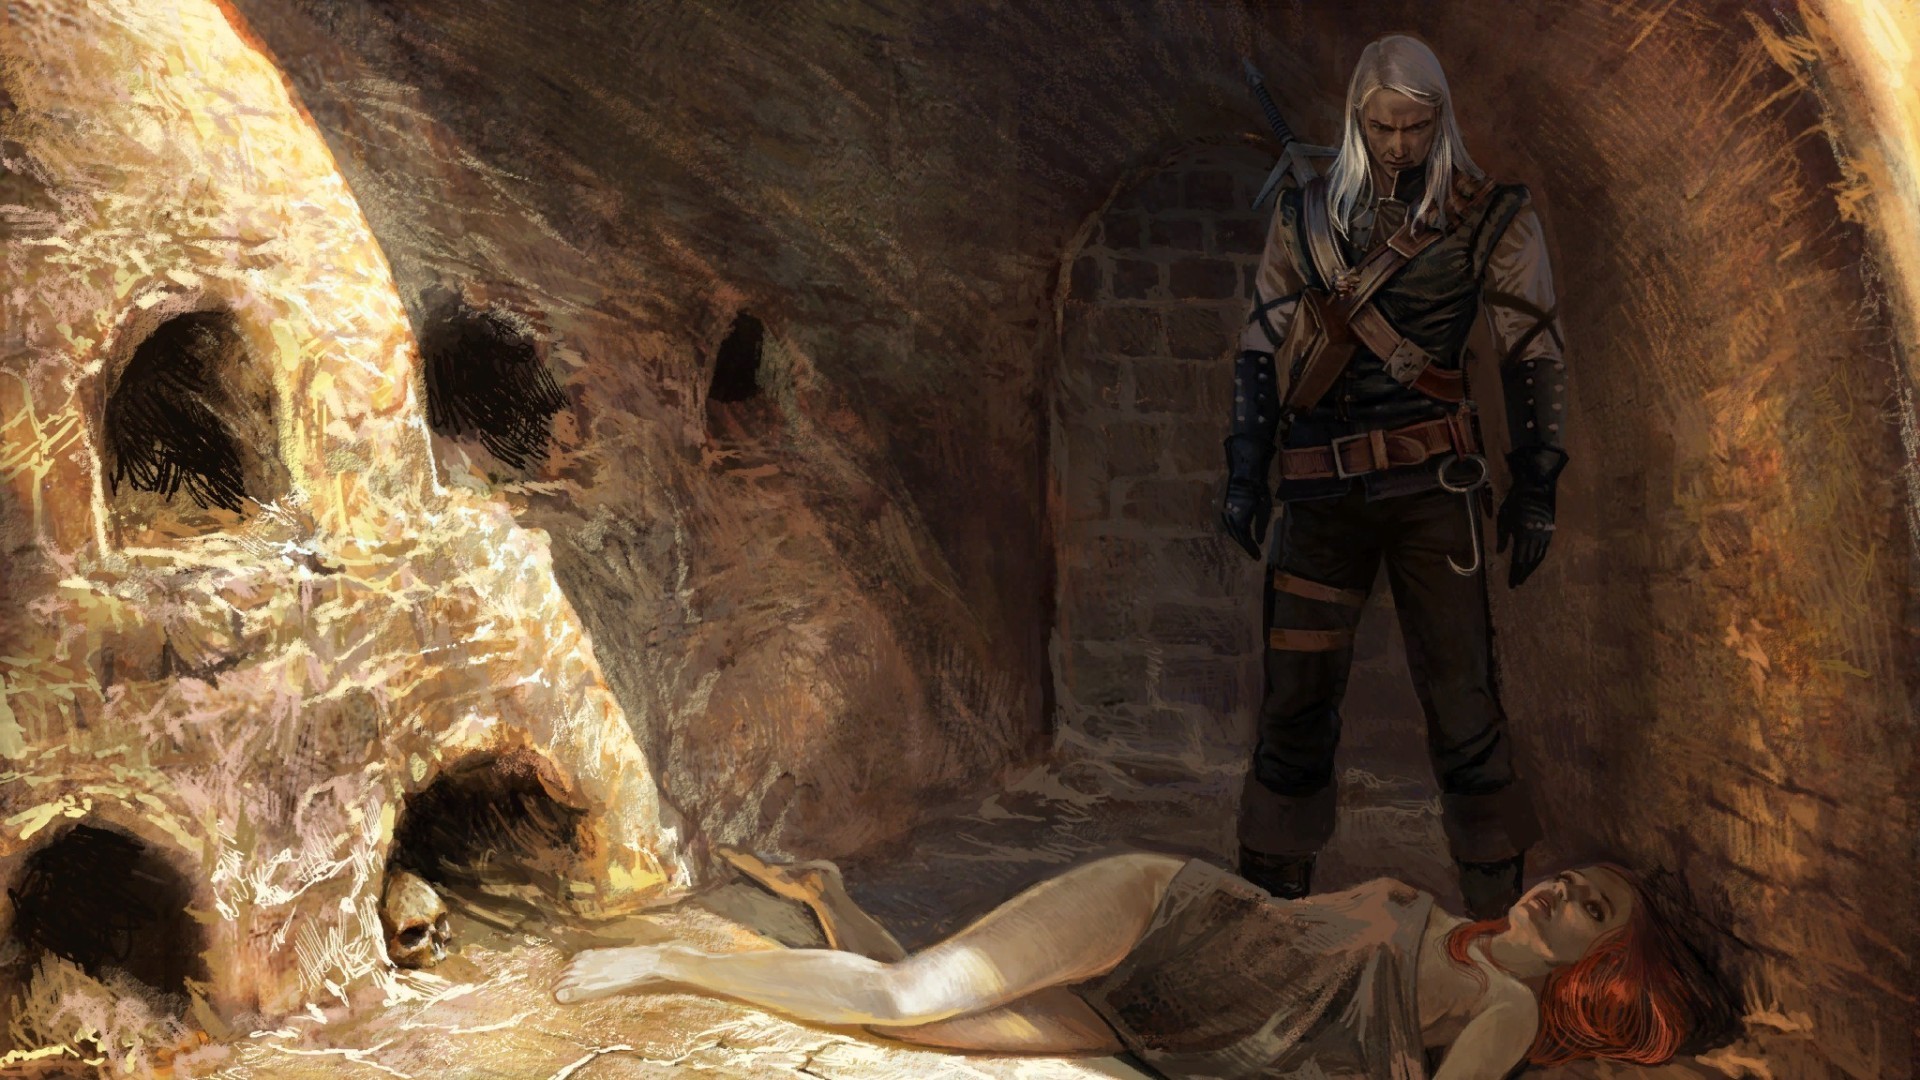 General 1920x1080 The Witcher video games Geralt of Rivia PC gaming video game art RPG fantasy men fantasy art